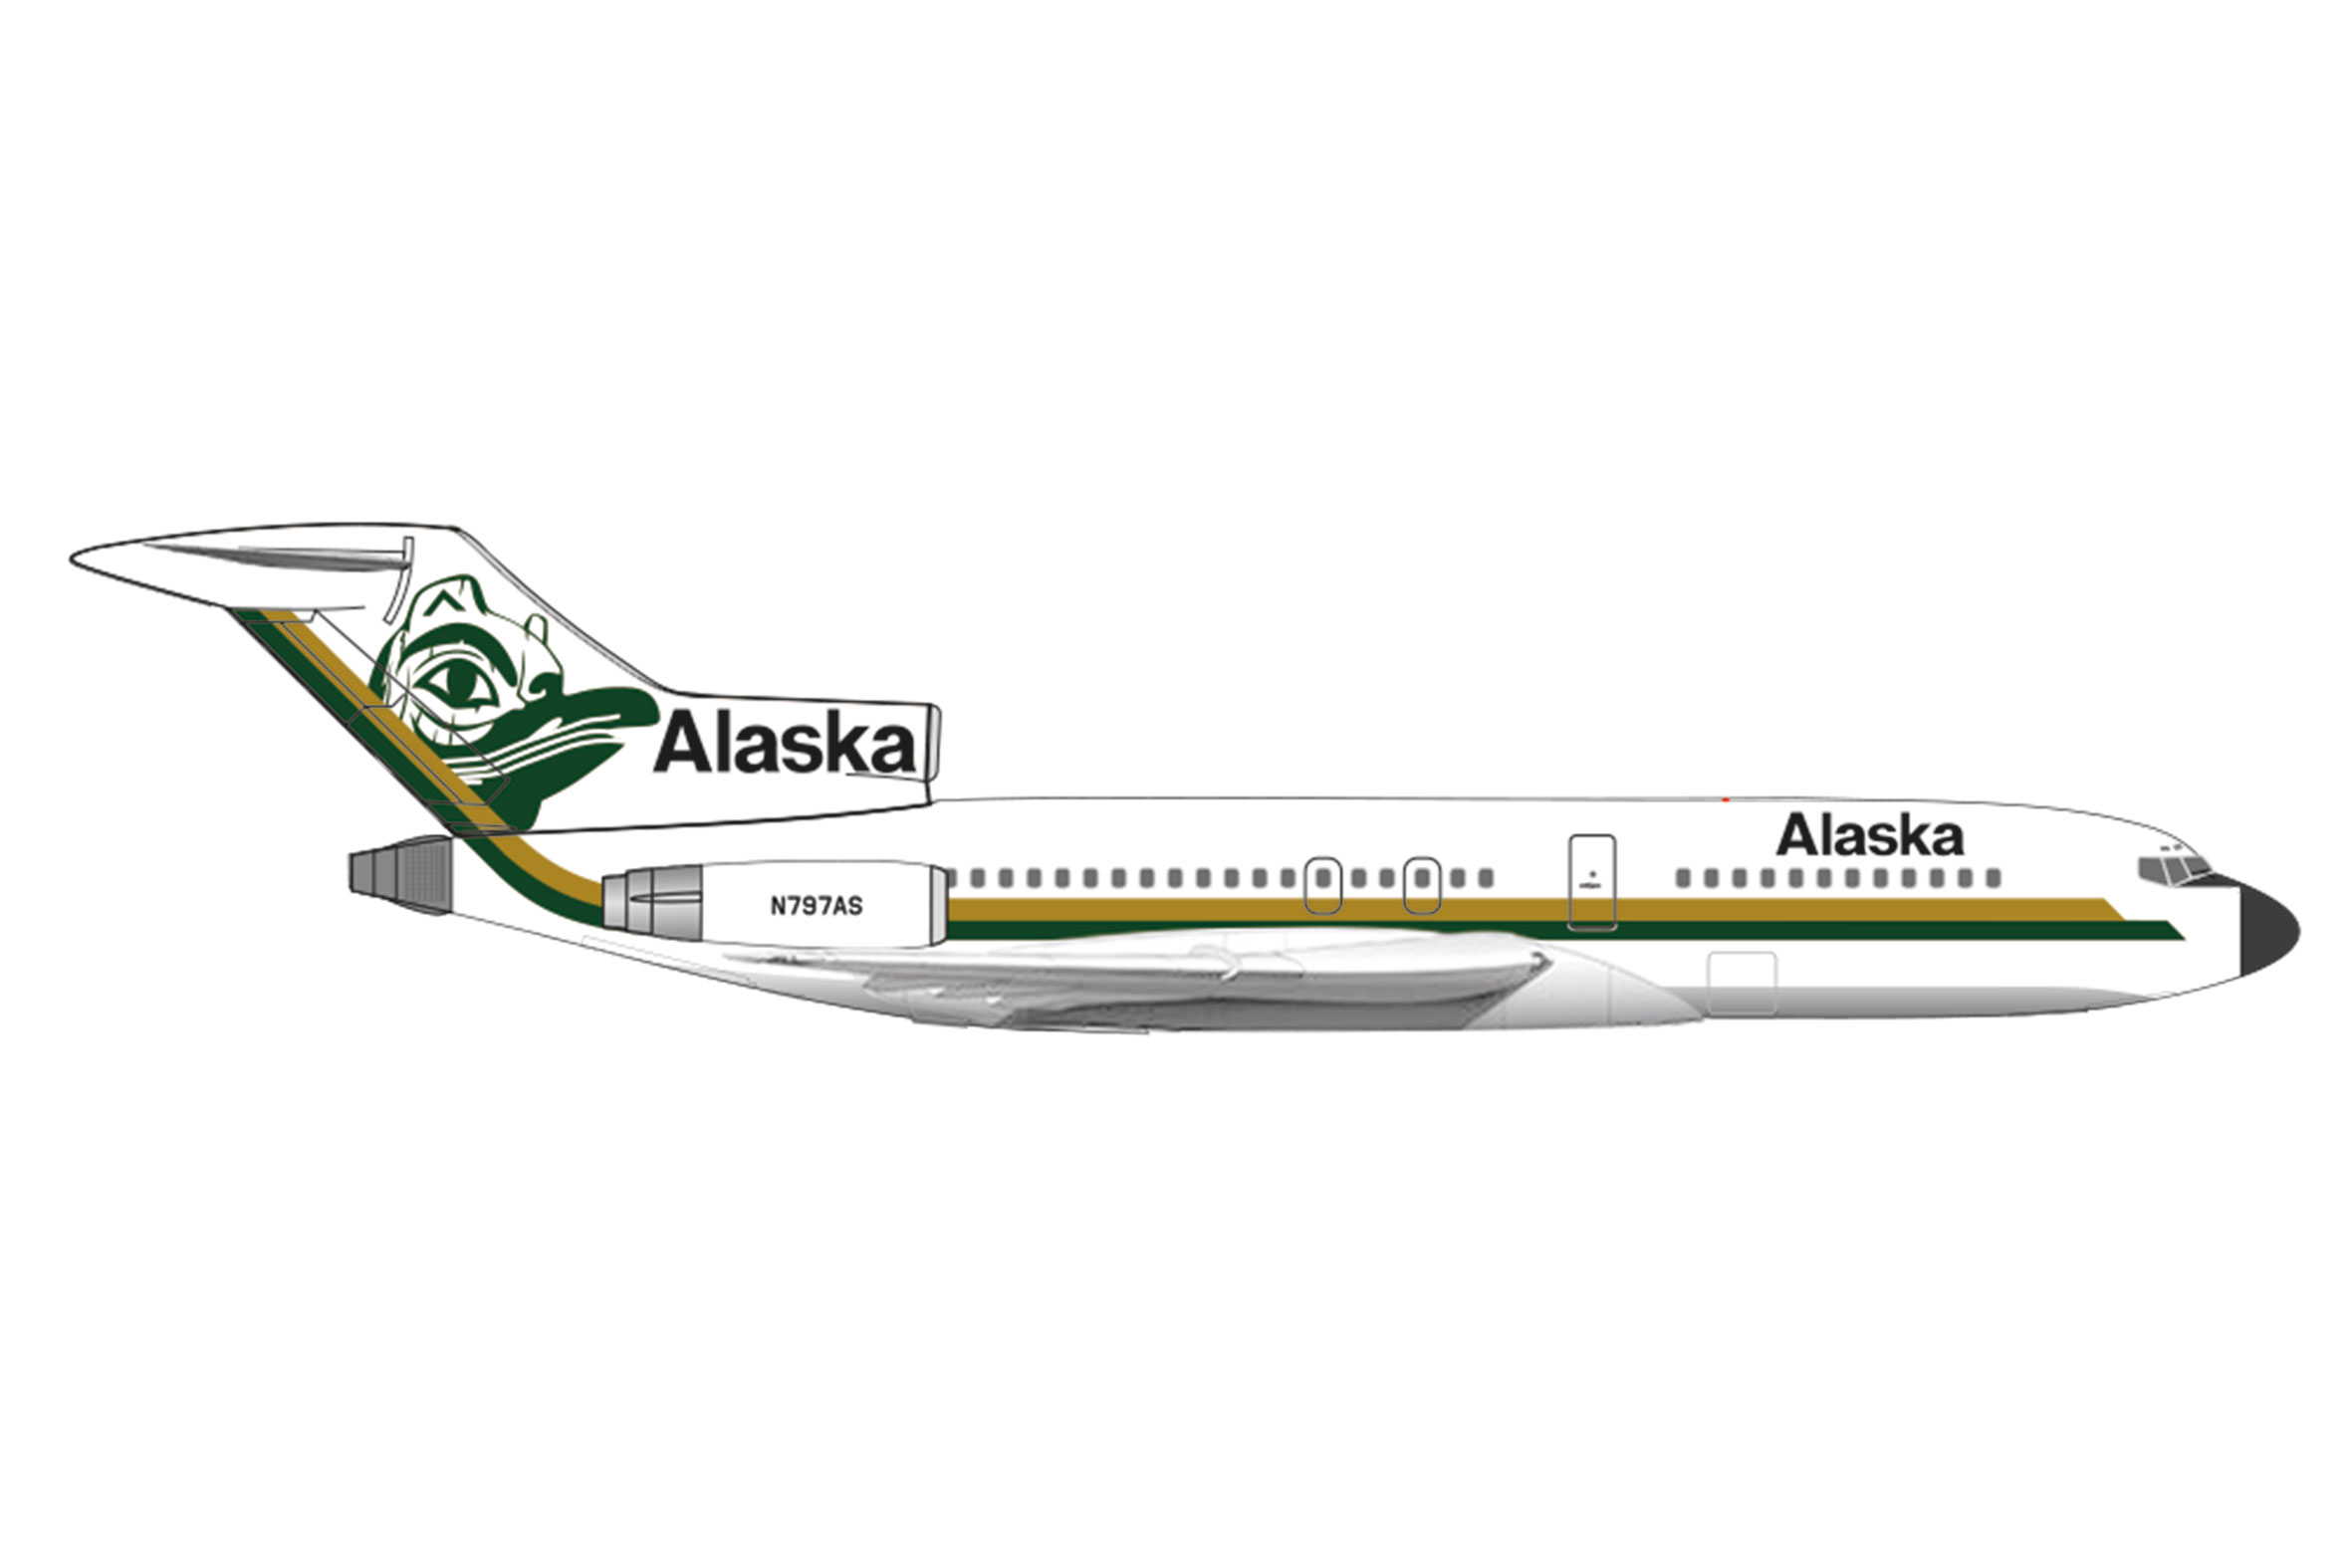 B727-100 Alaska "Totem Pole"